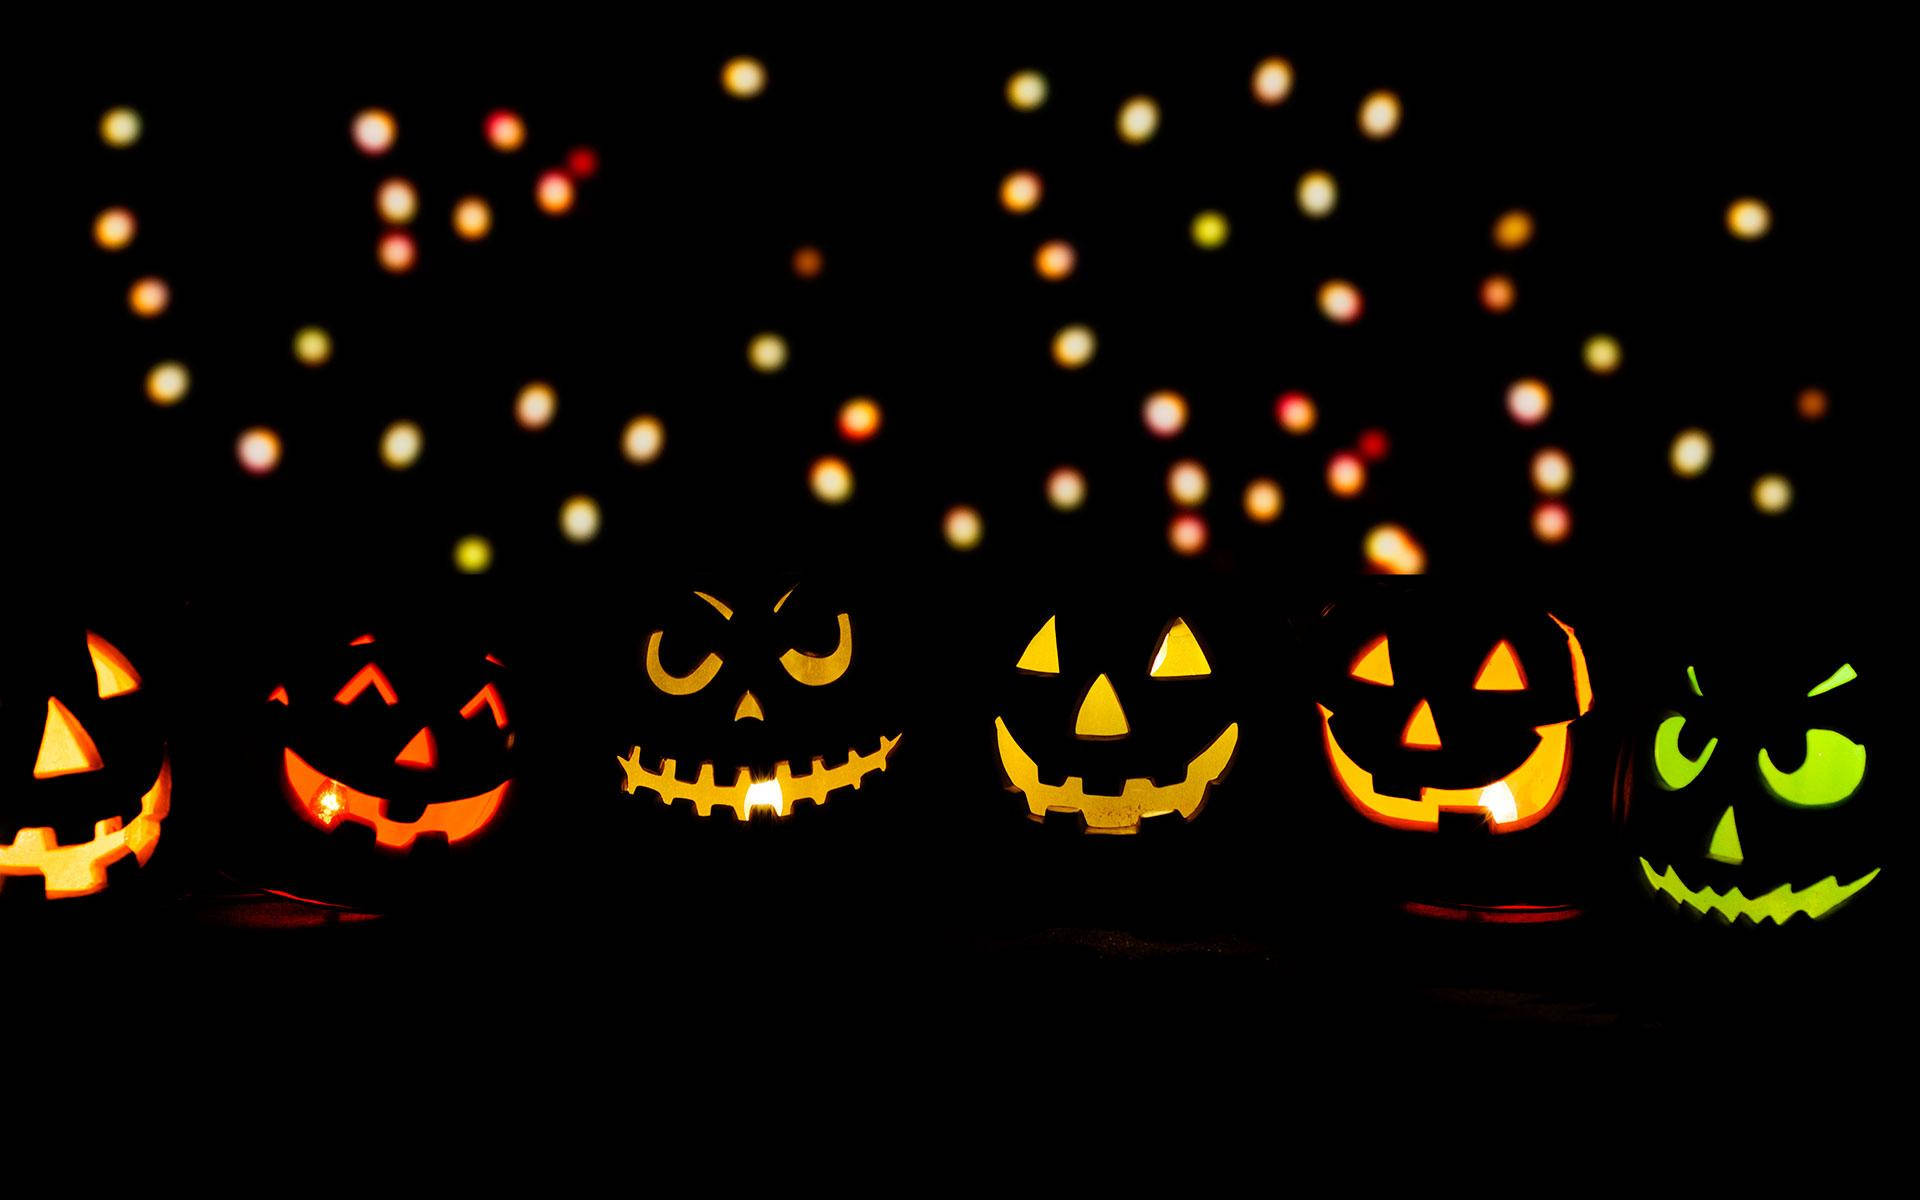 Cute Aesthetic Halloween Glowing Jack-o'-lanterns Background